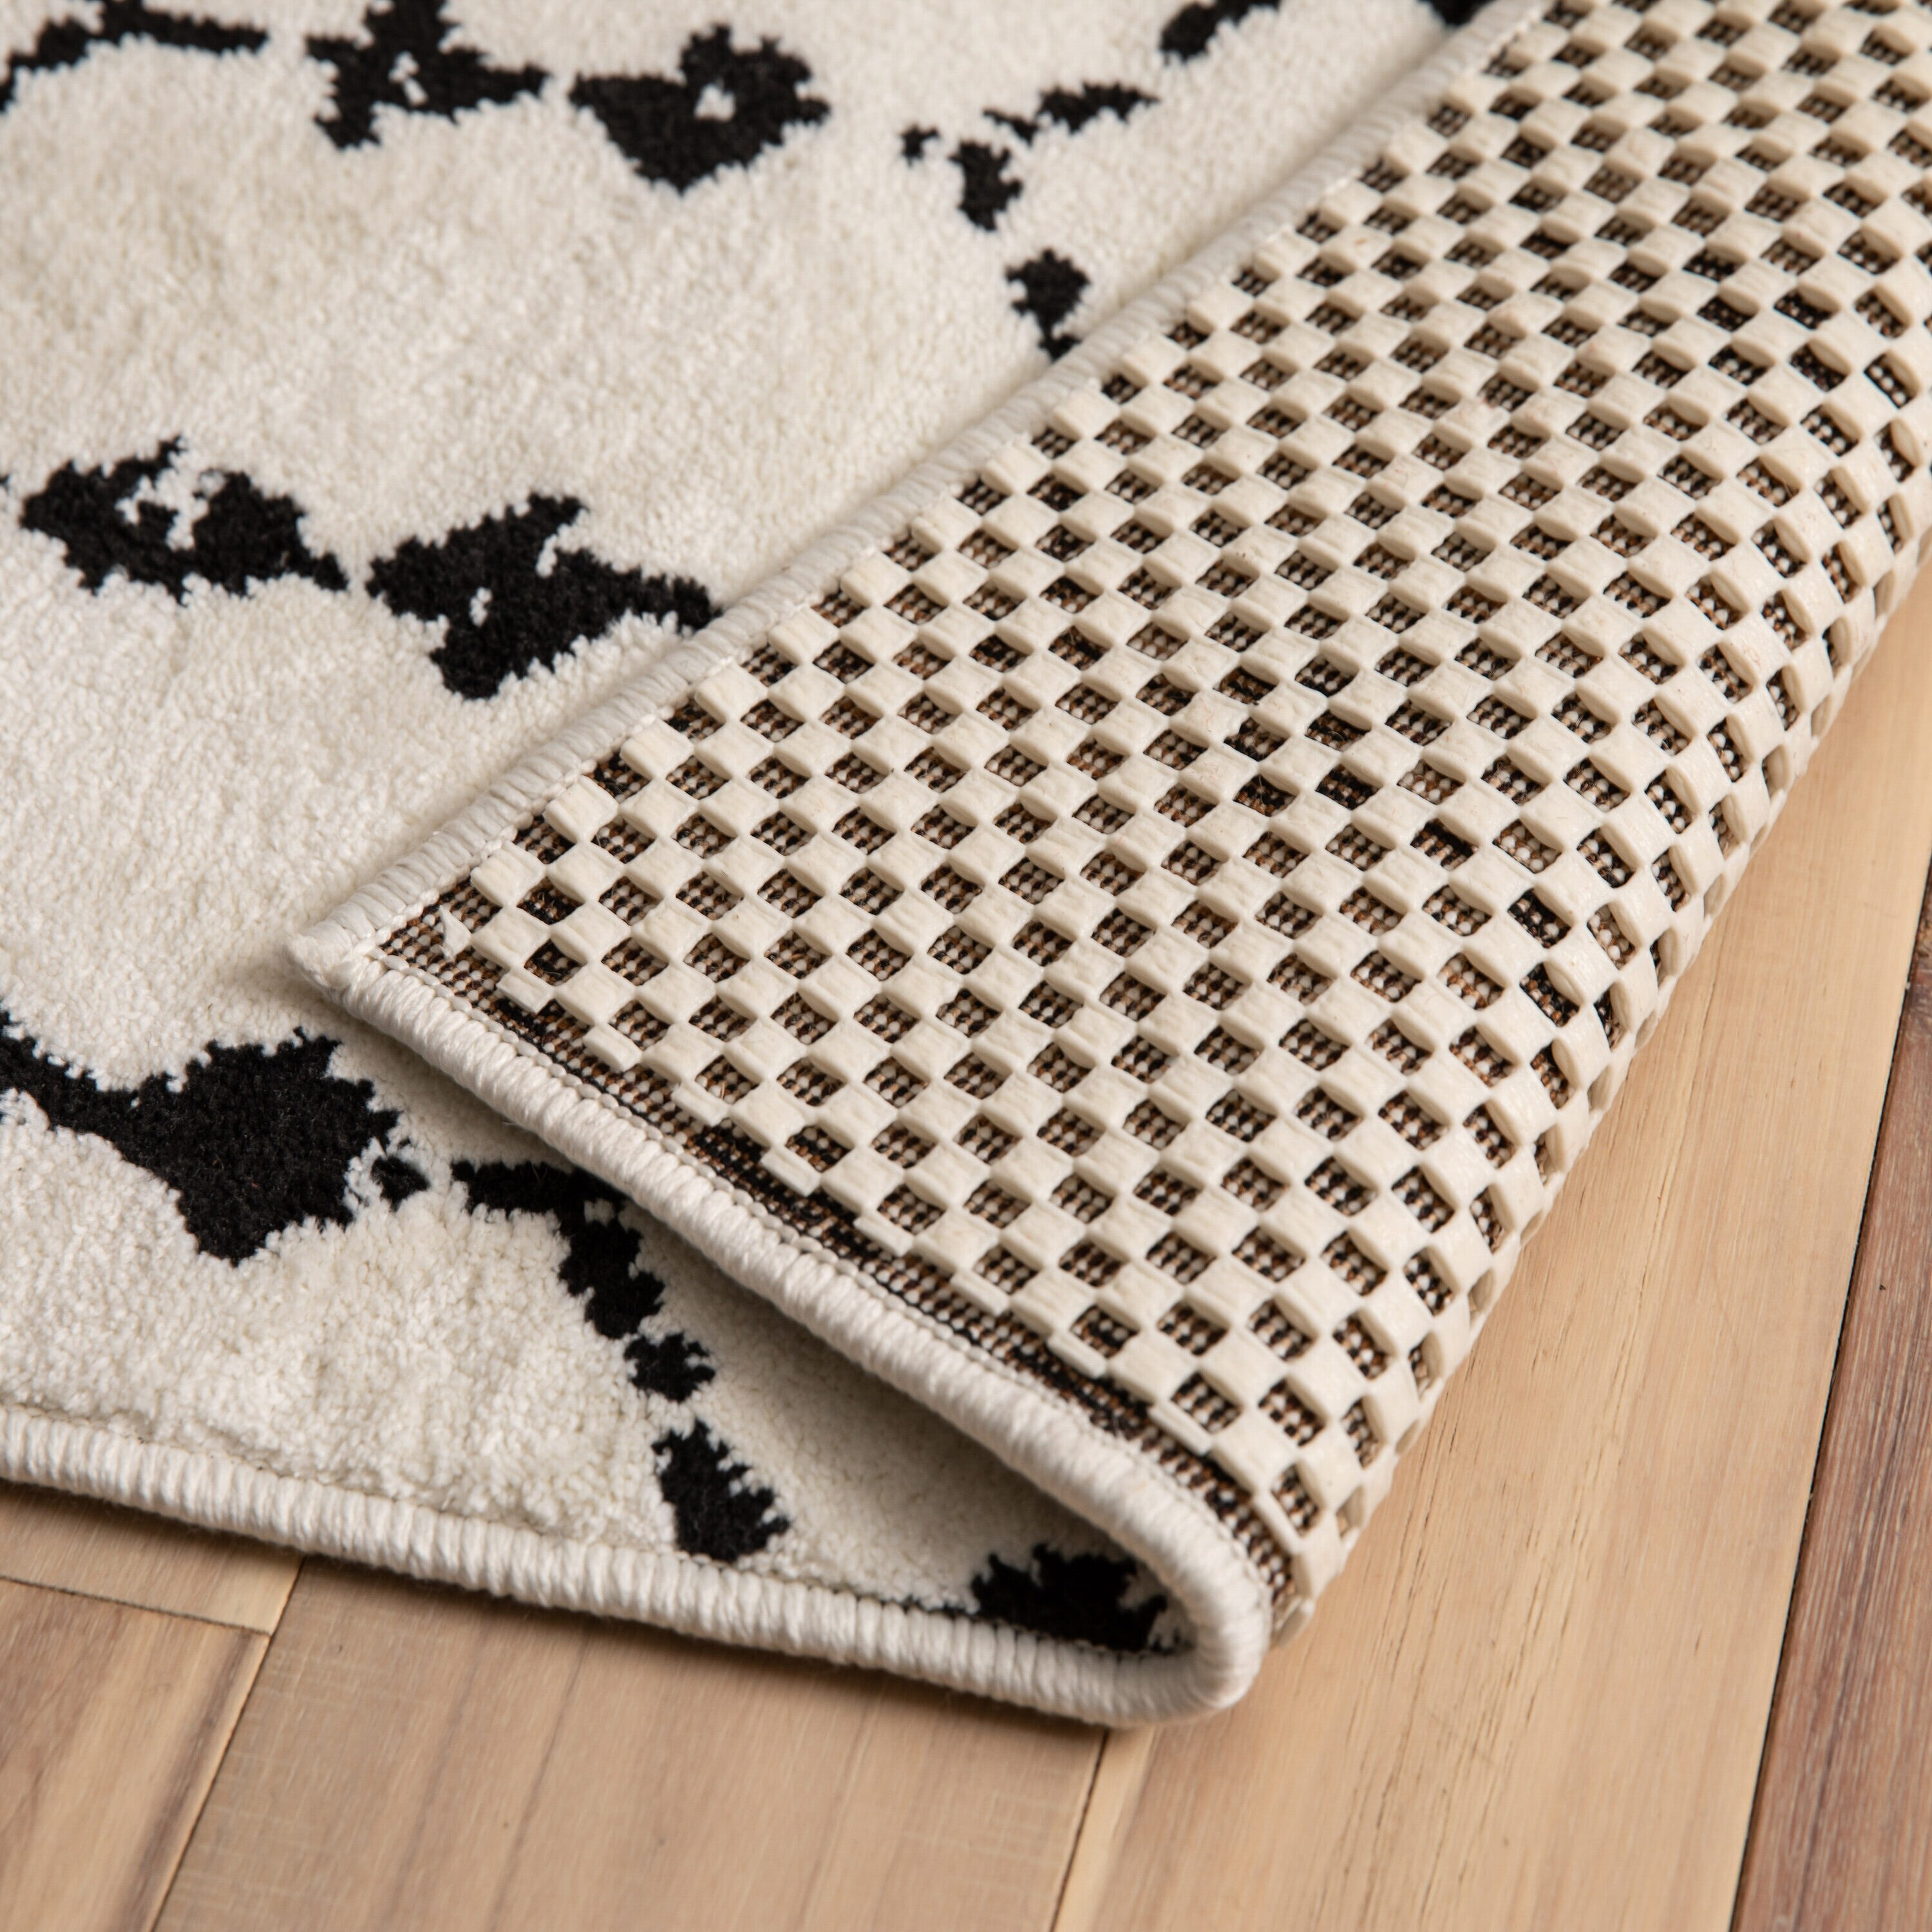 Nance Carpet and Rug Pad 6 X 9 (ft) Rectangular Foam Rug Pad in